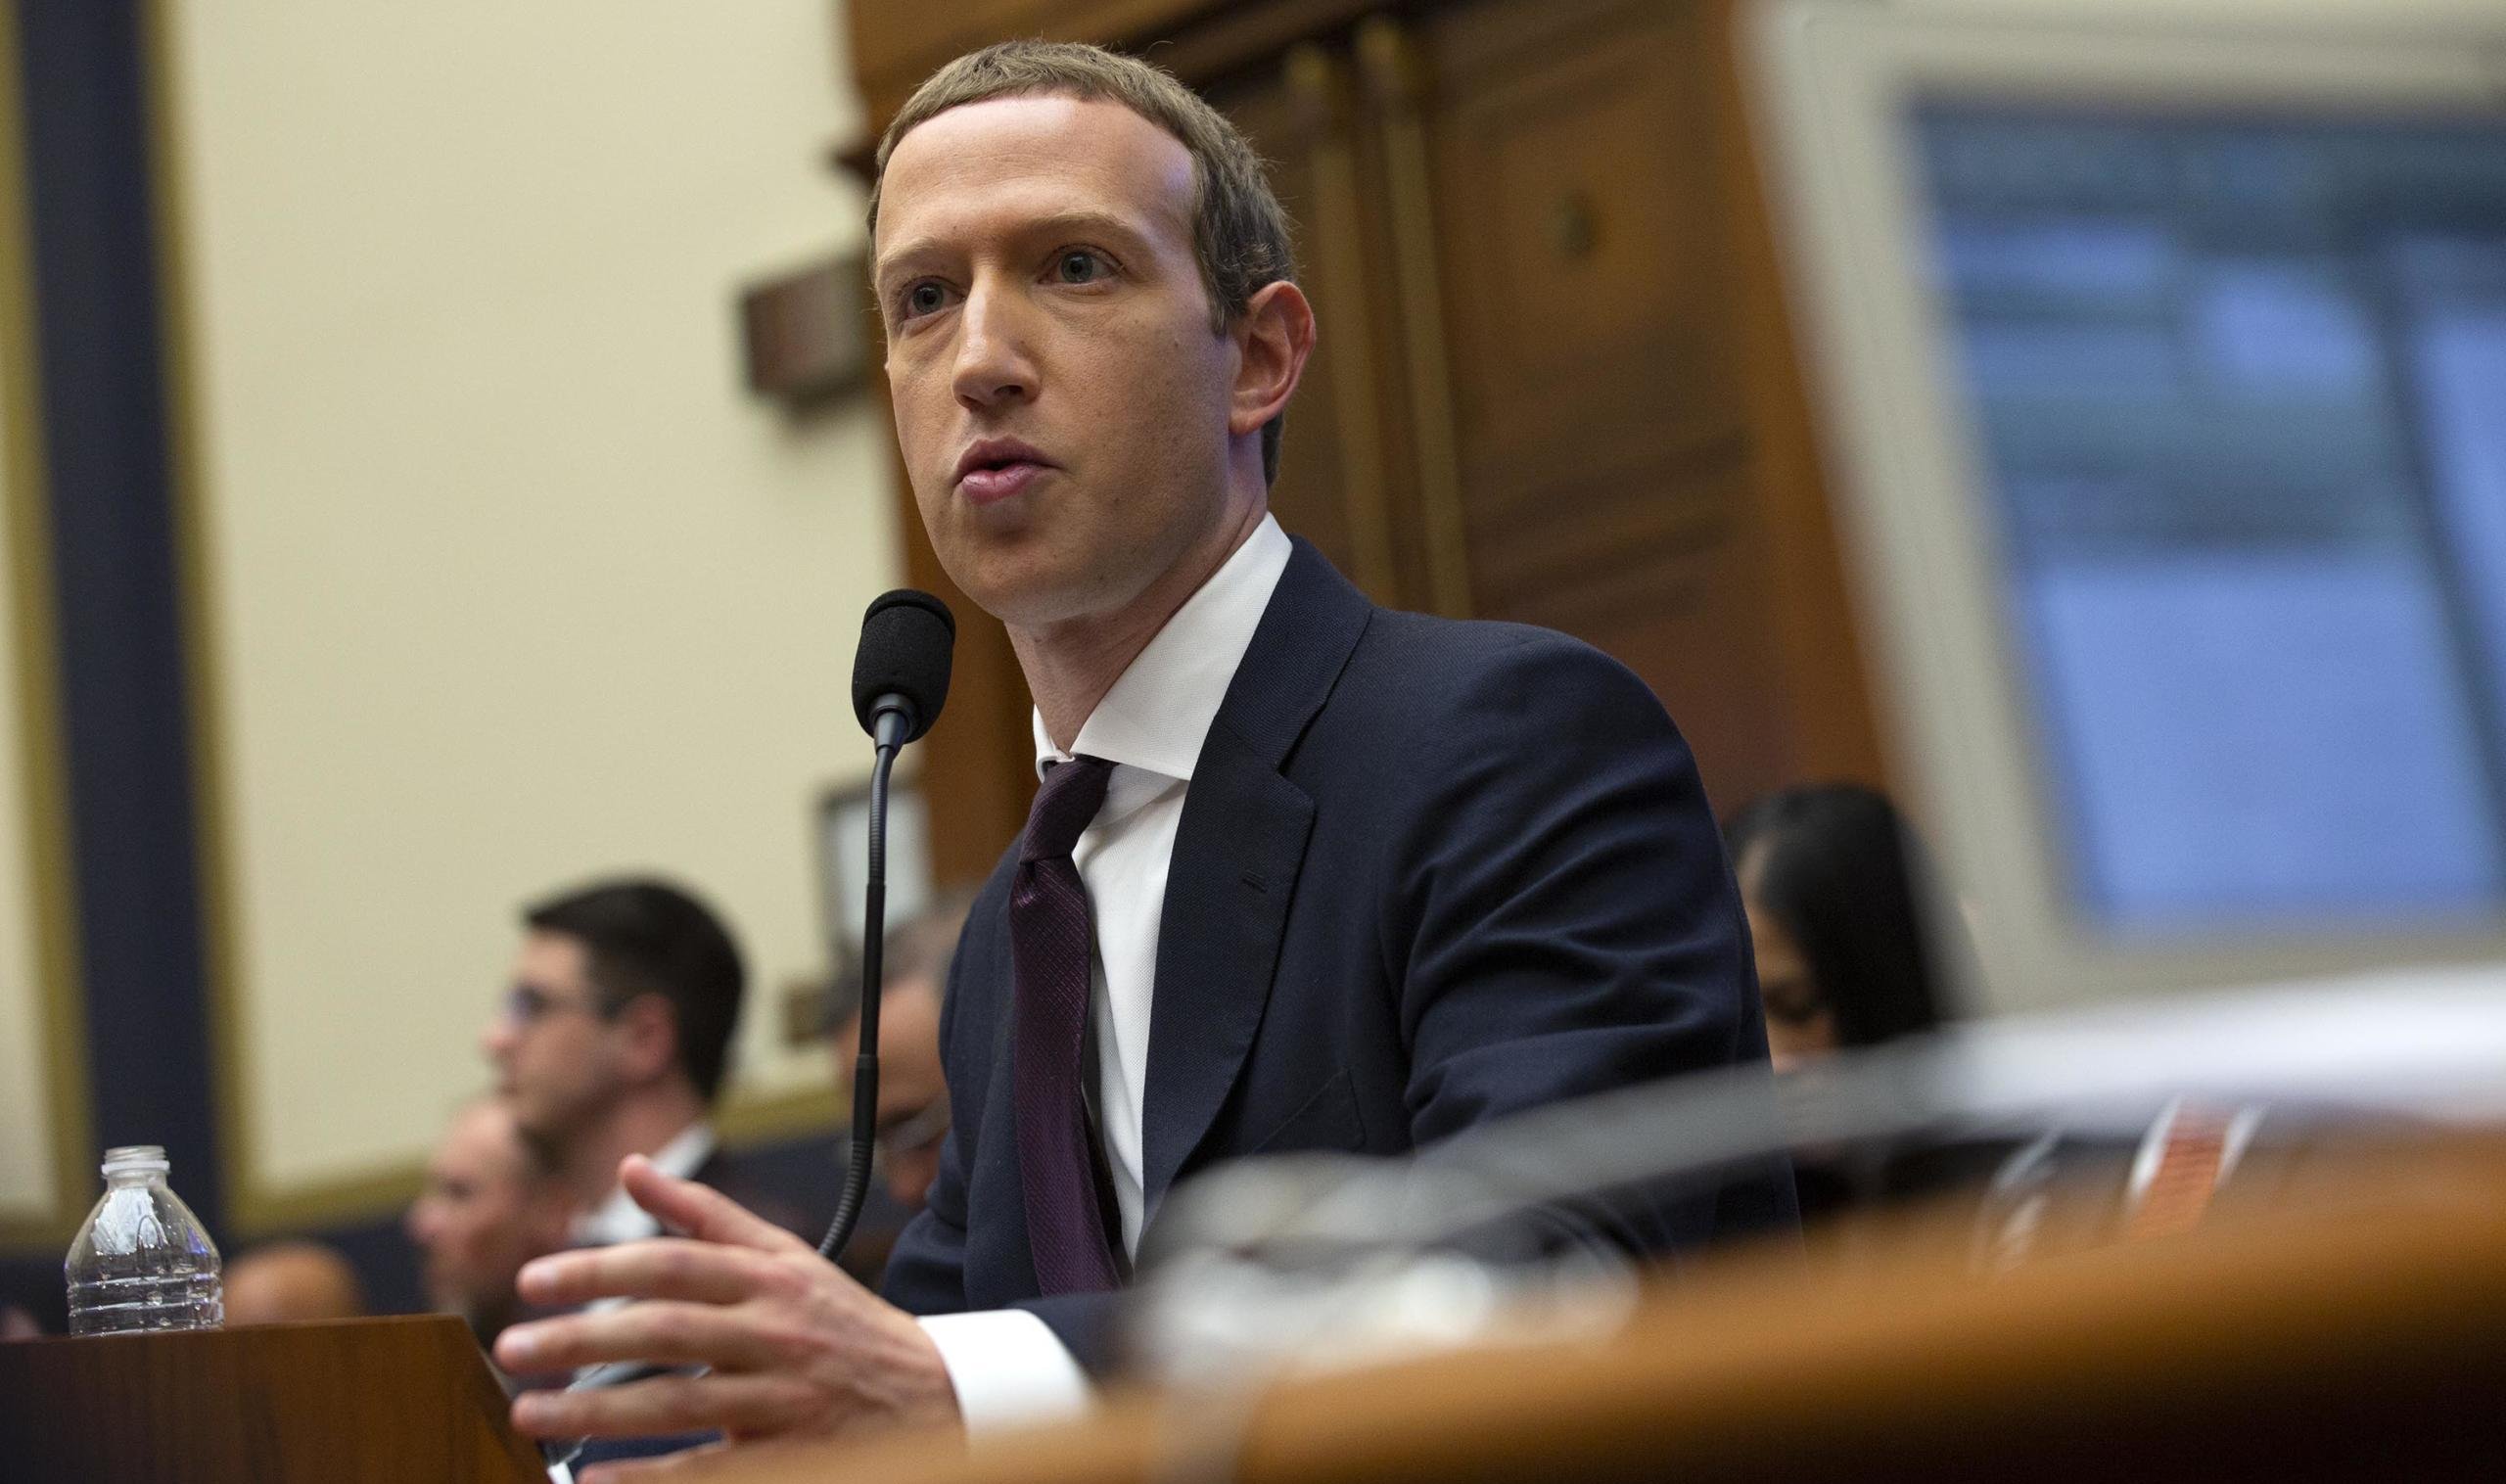 meta facebook mark zuckerberg russia hate speech